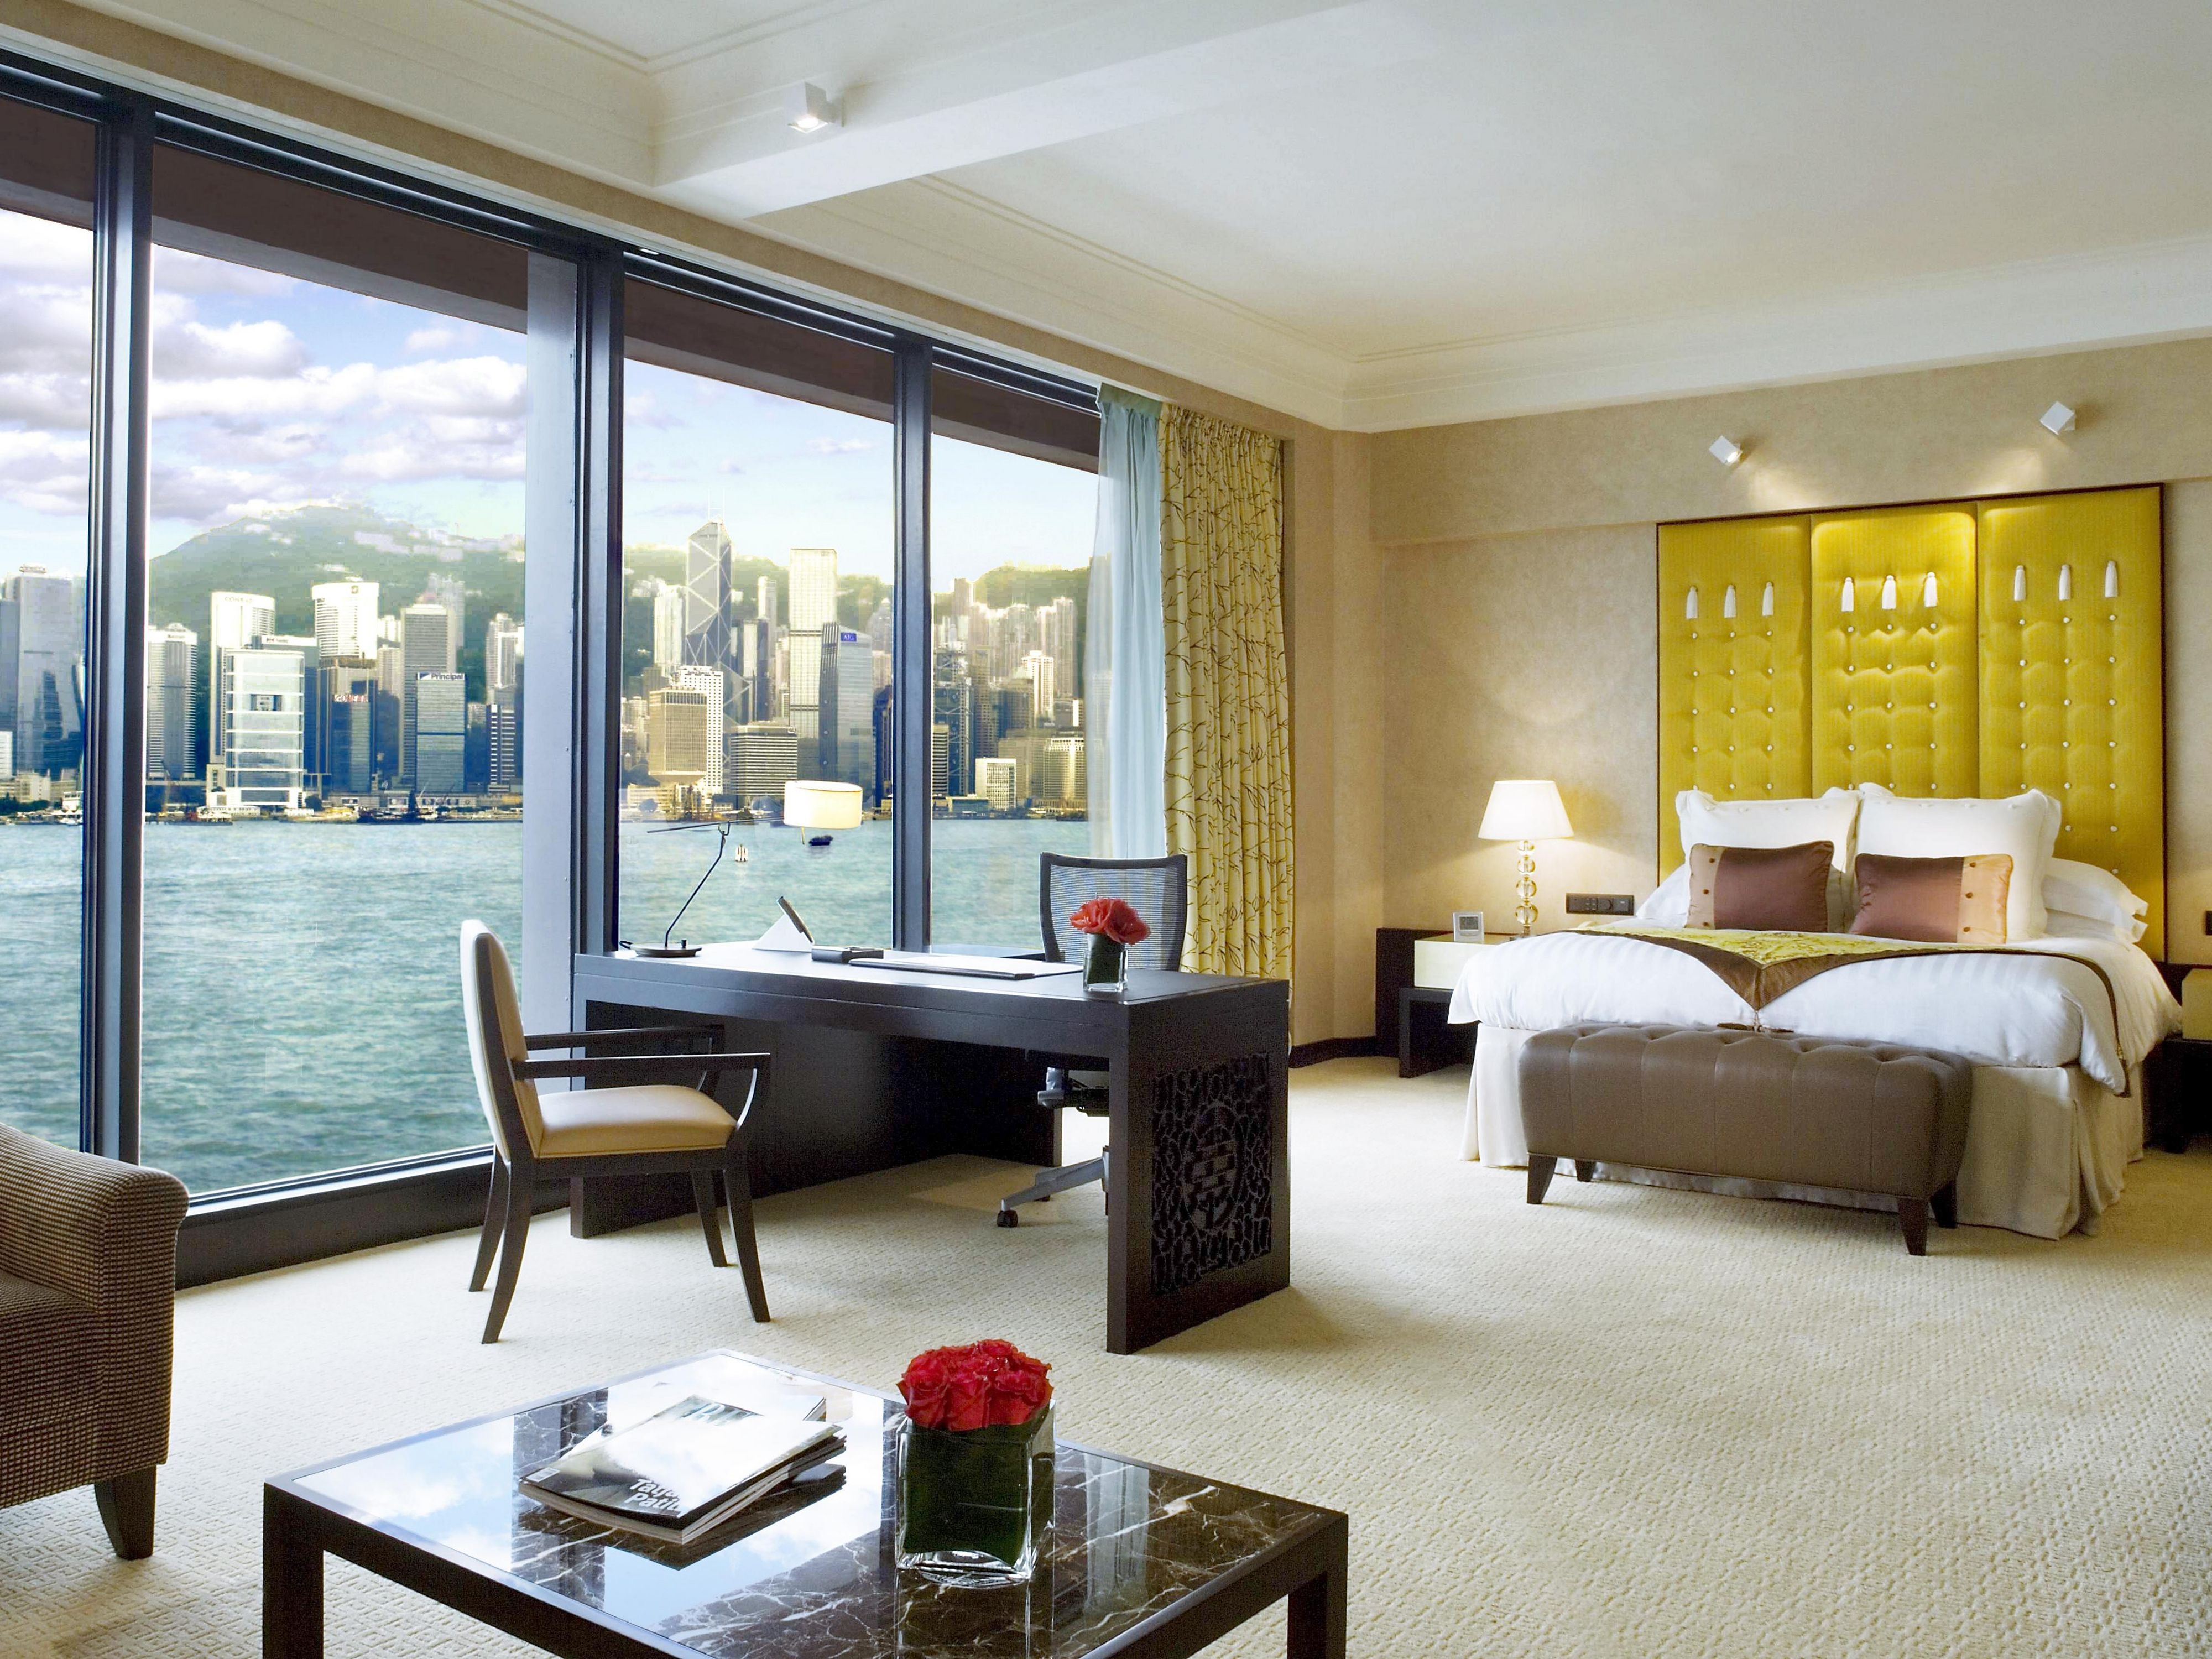 Hotel Benefits Without Elite Status - IHG Hong Kong Suite Upgrade